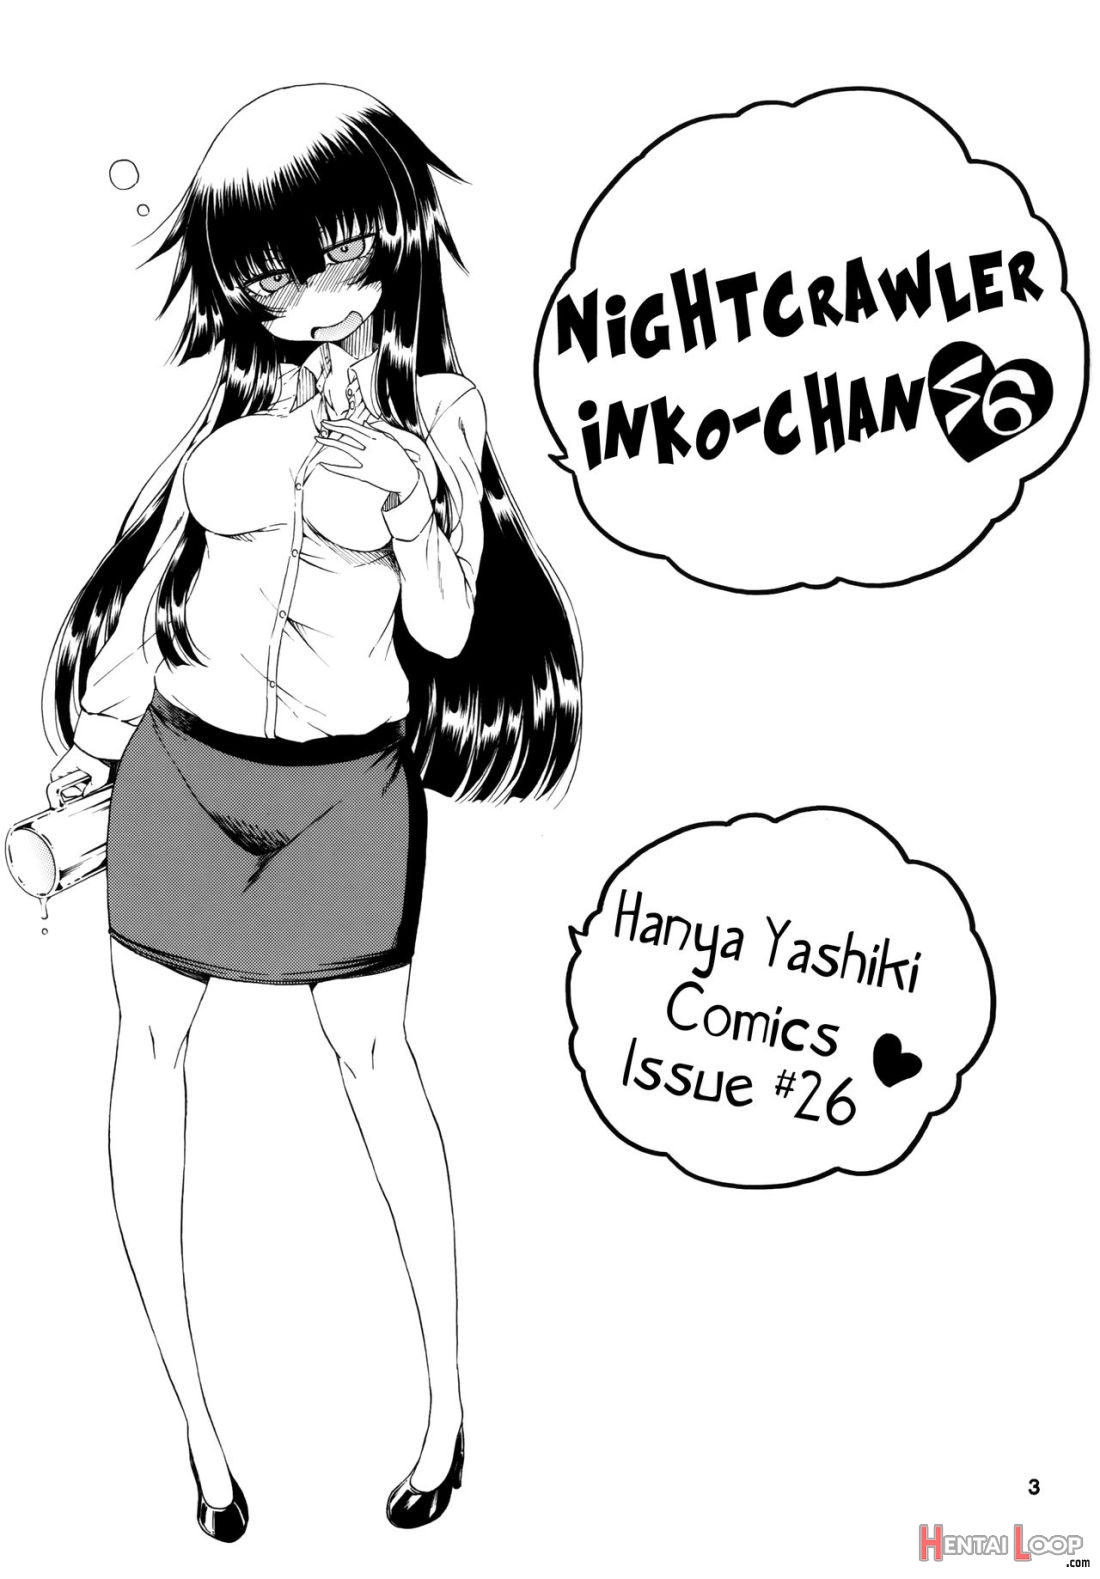 Yobae Inko-chan S6 page 2